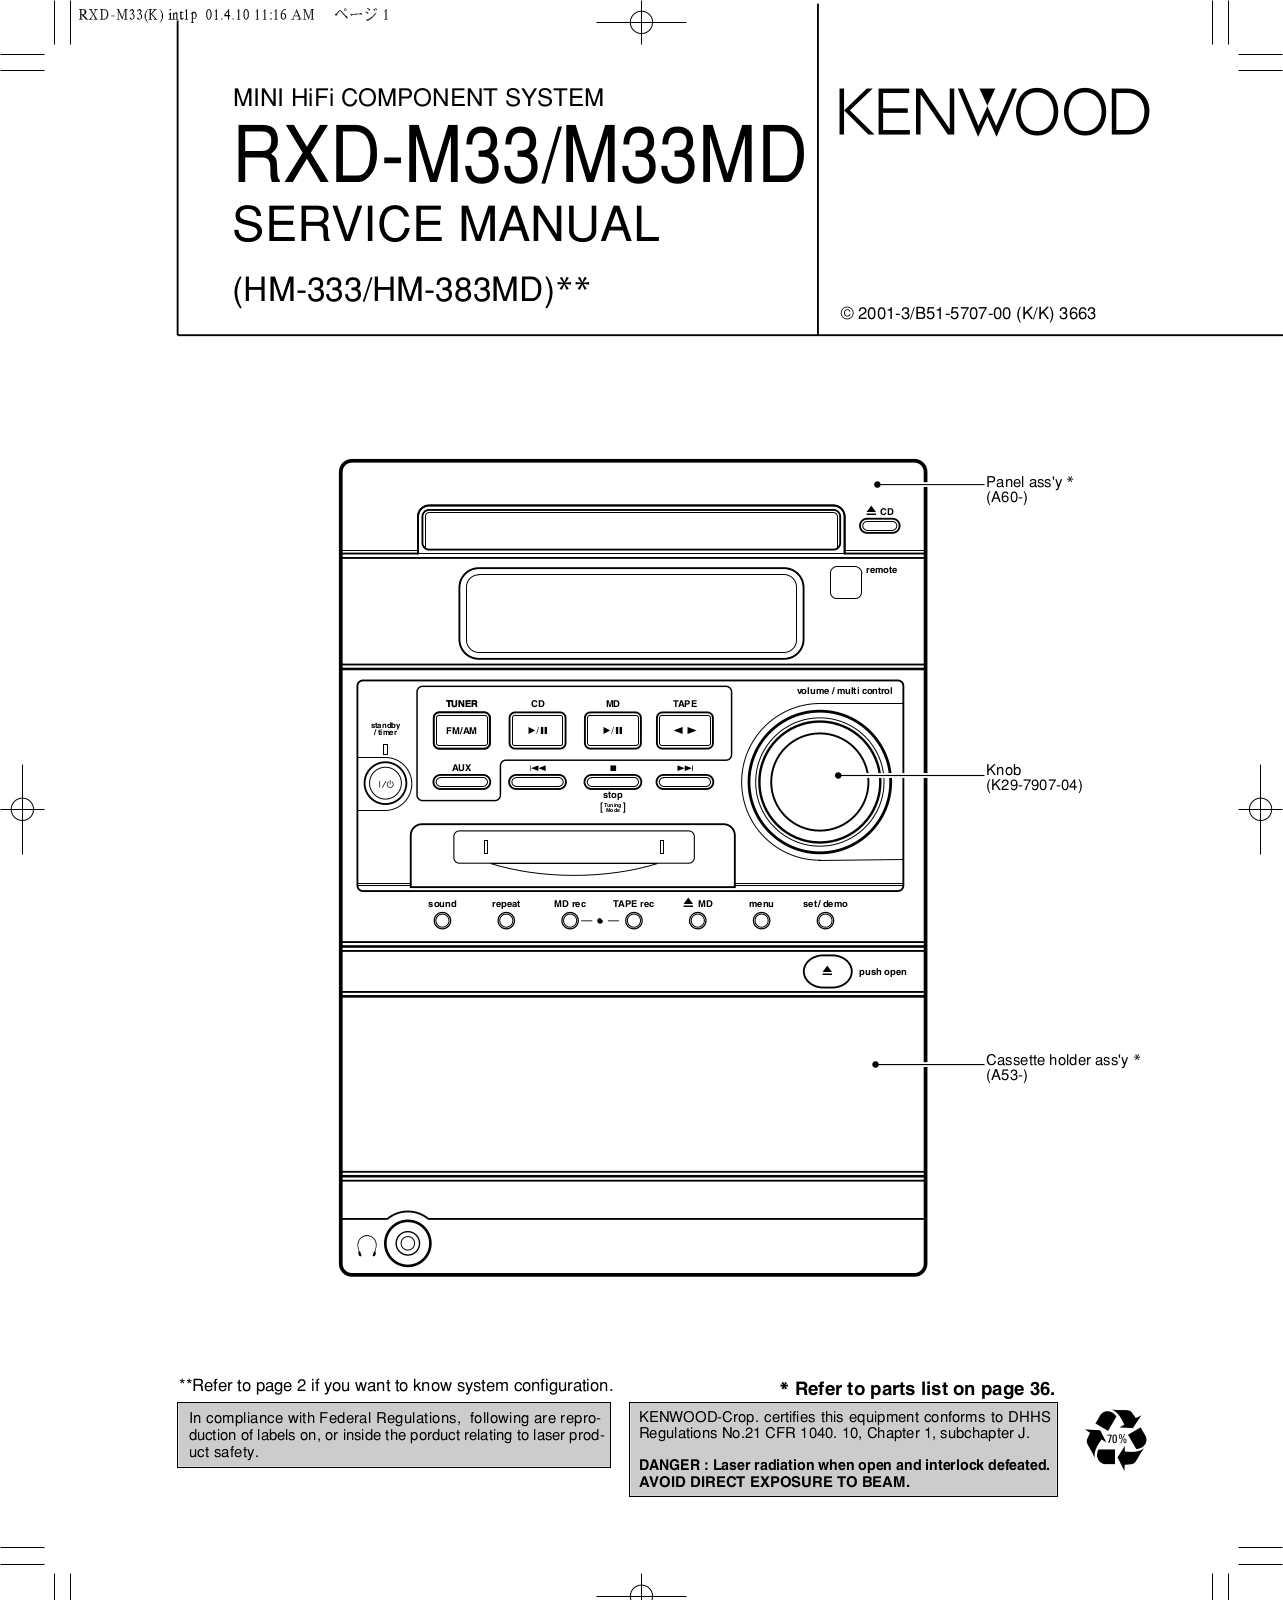 Kenwood RX-DM33-MD, HM-383-MD, HM-333 Service Manual